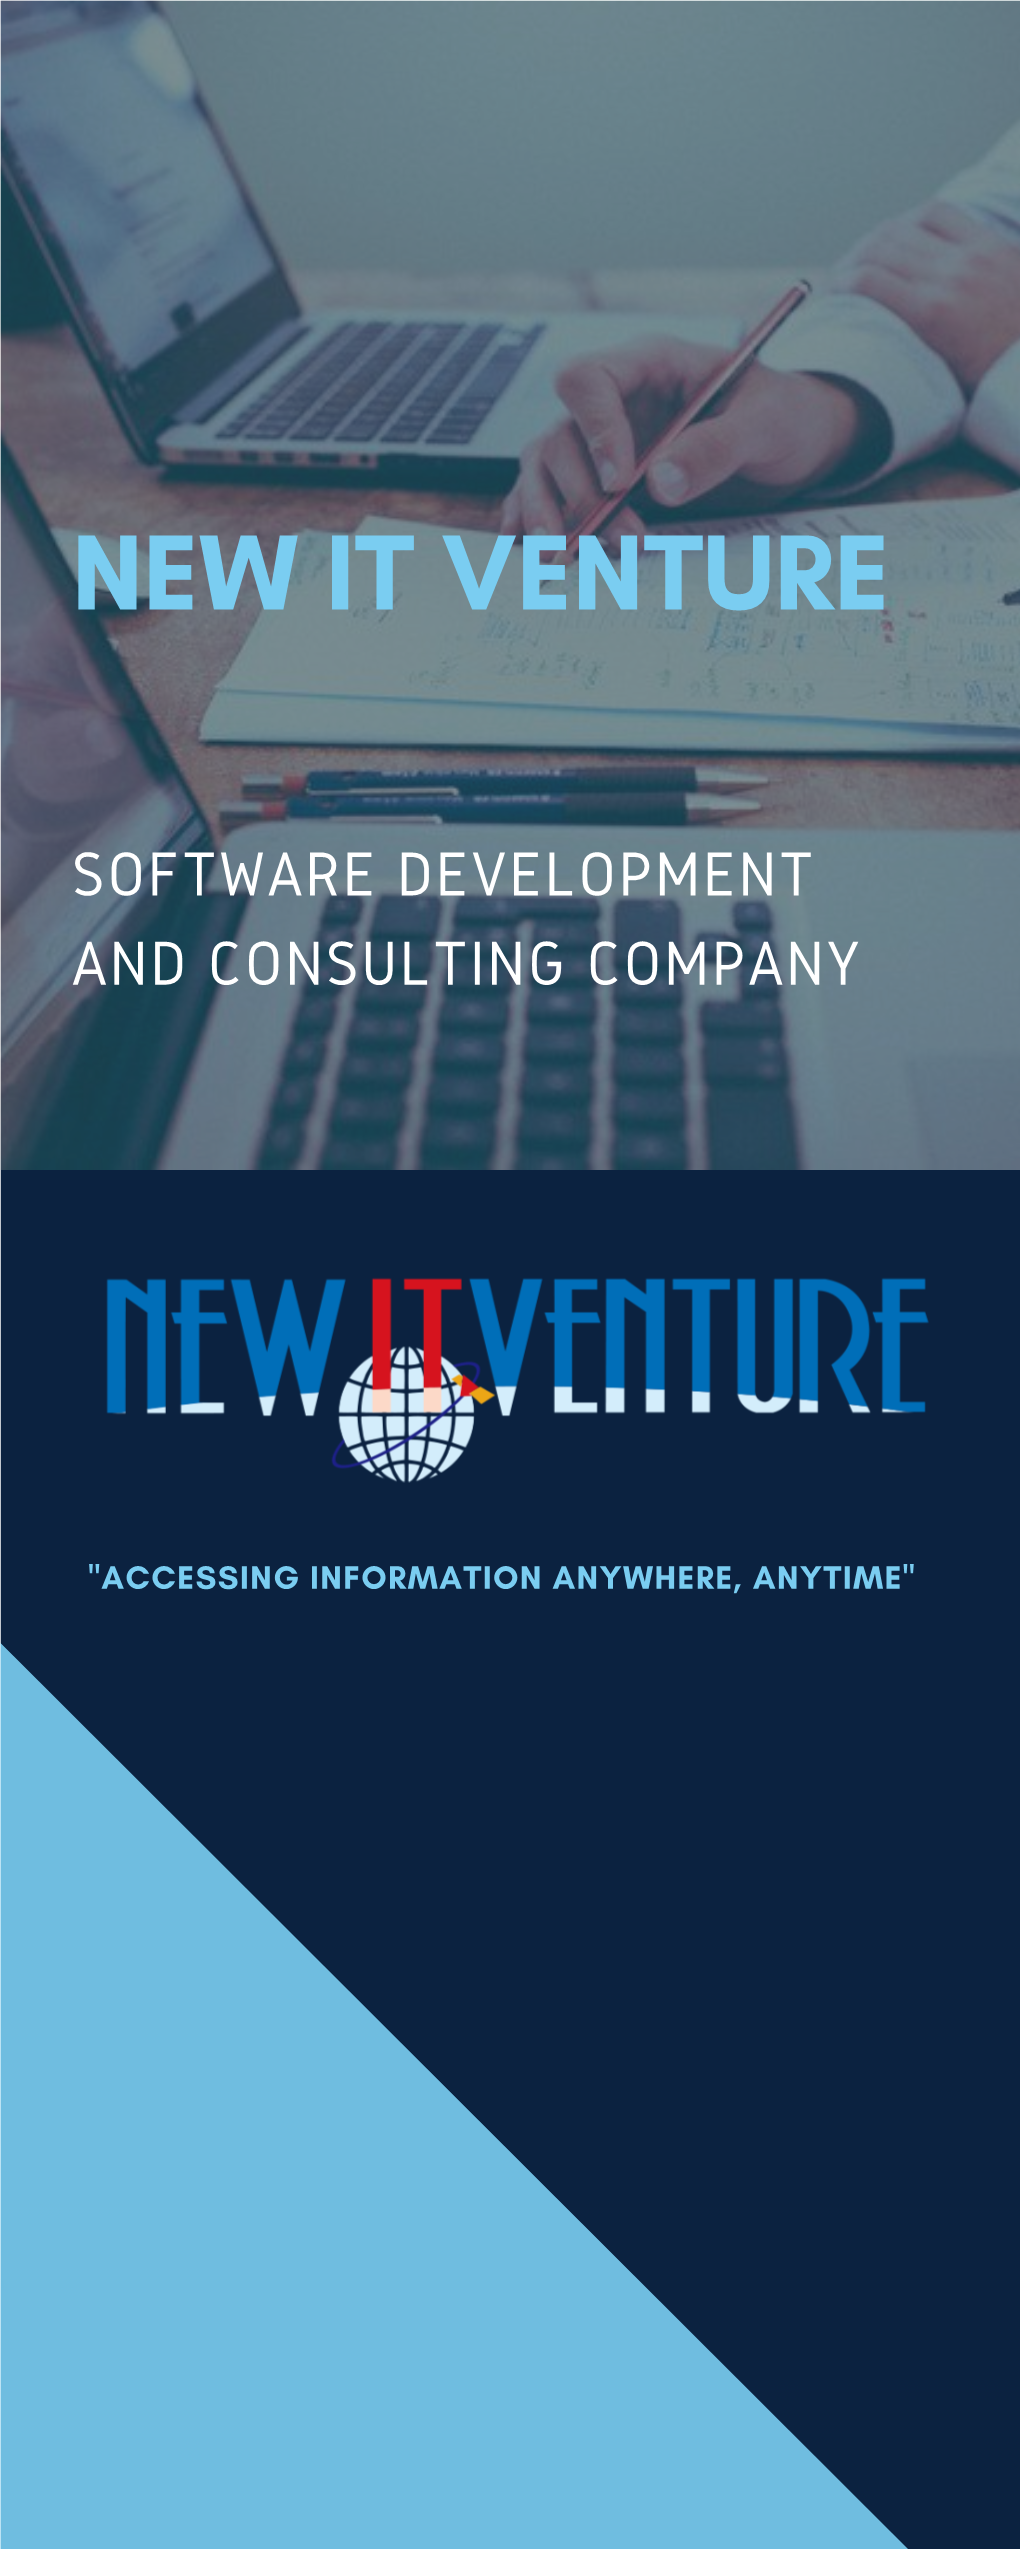 NITV As Software Development Company